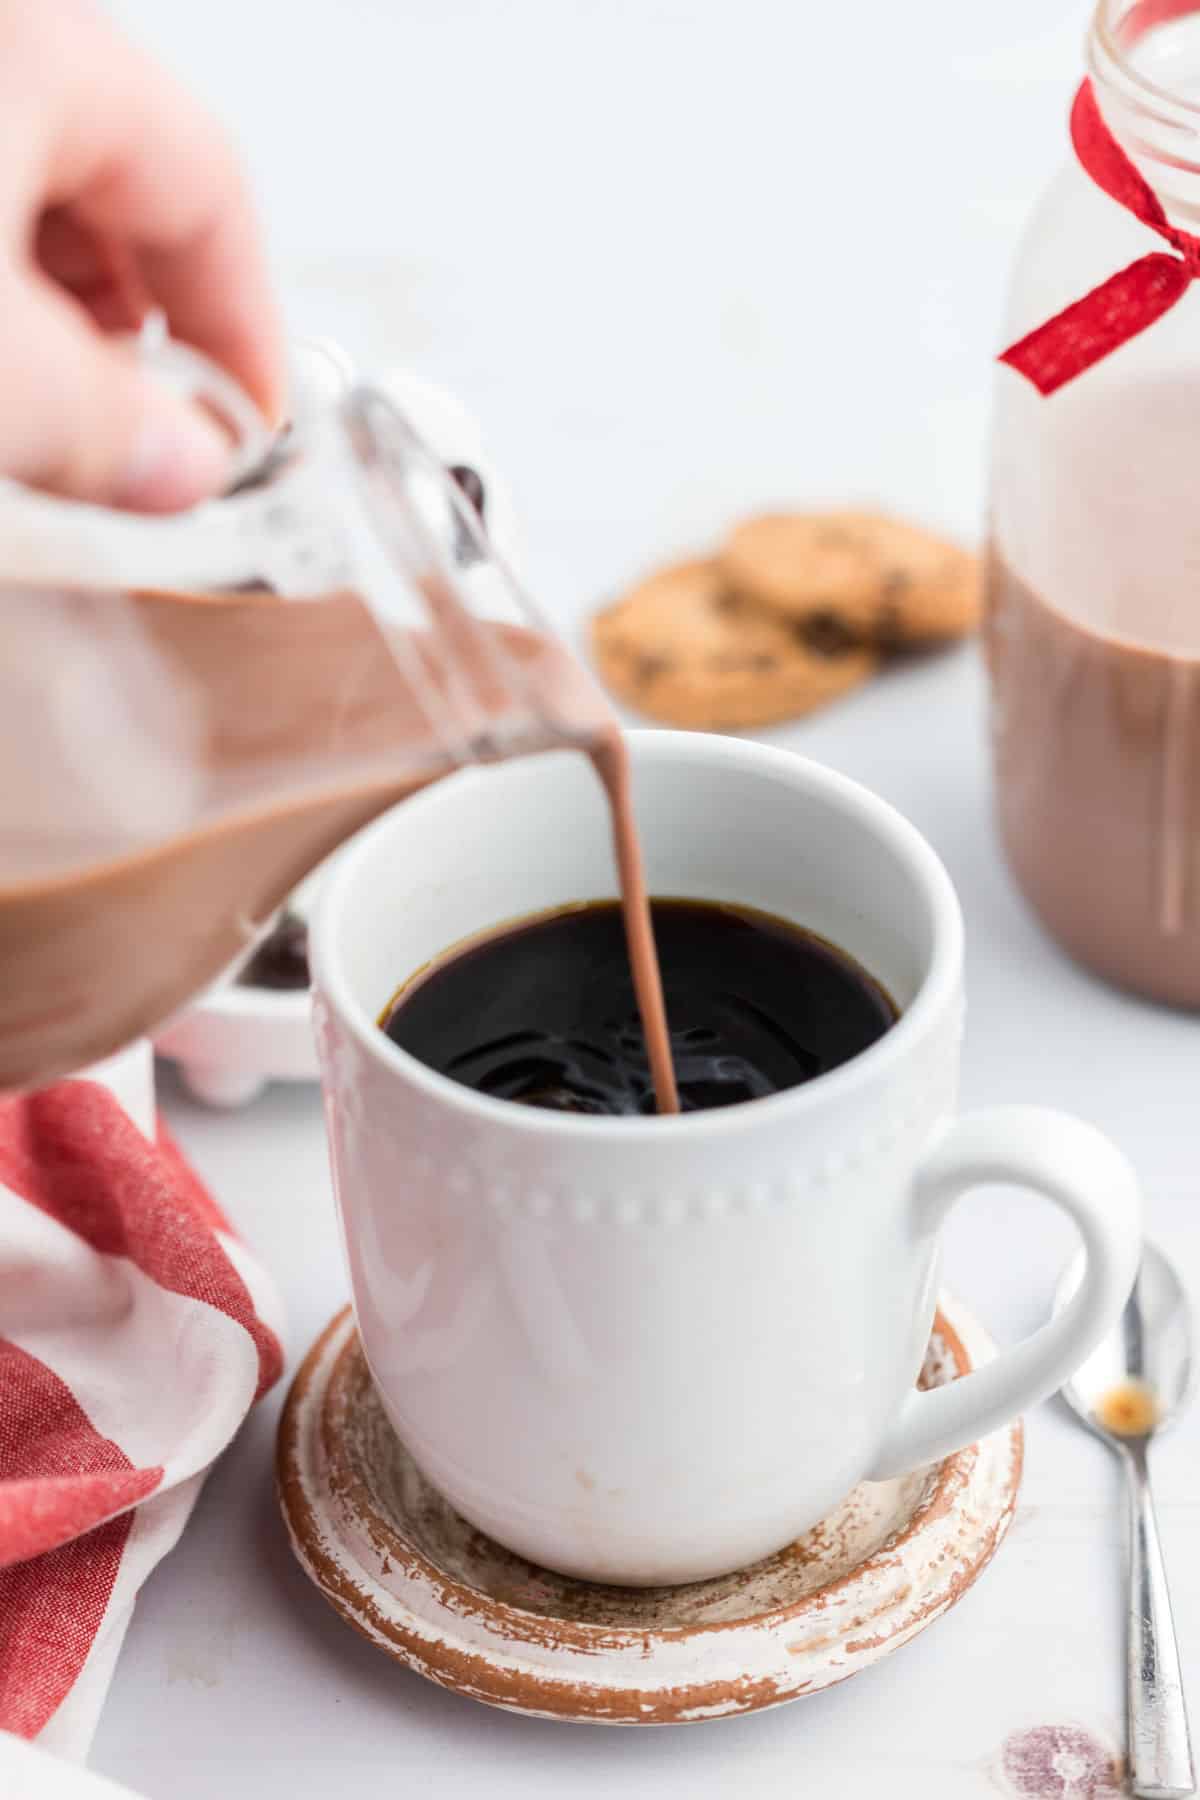 https://www.shugarysweets.com/wp-content/uploads/2014/10/chocolate-chip-coffee-creamer-served.jpg